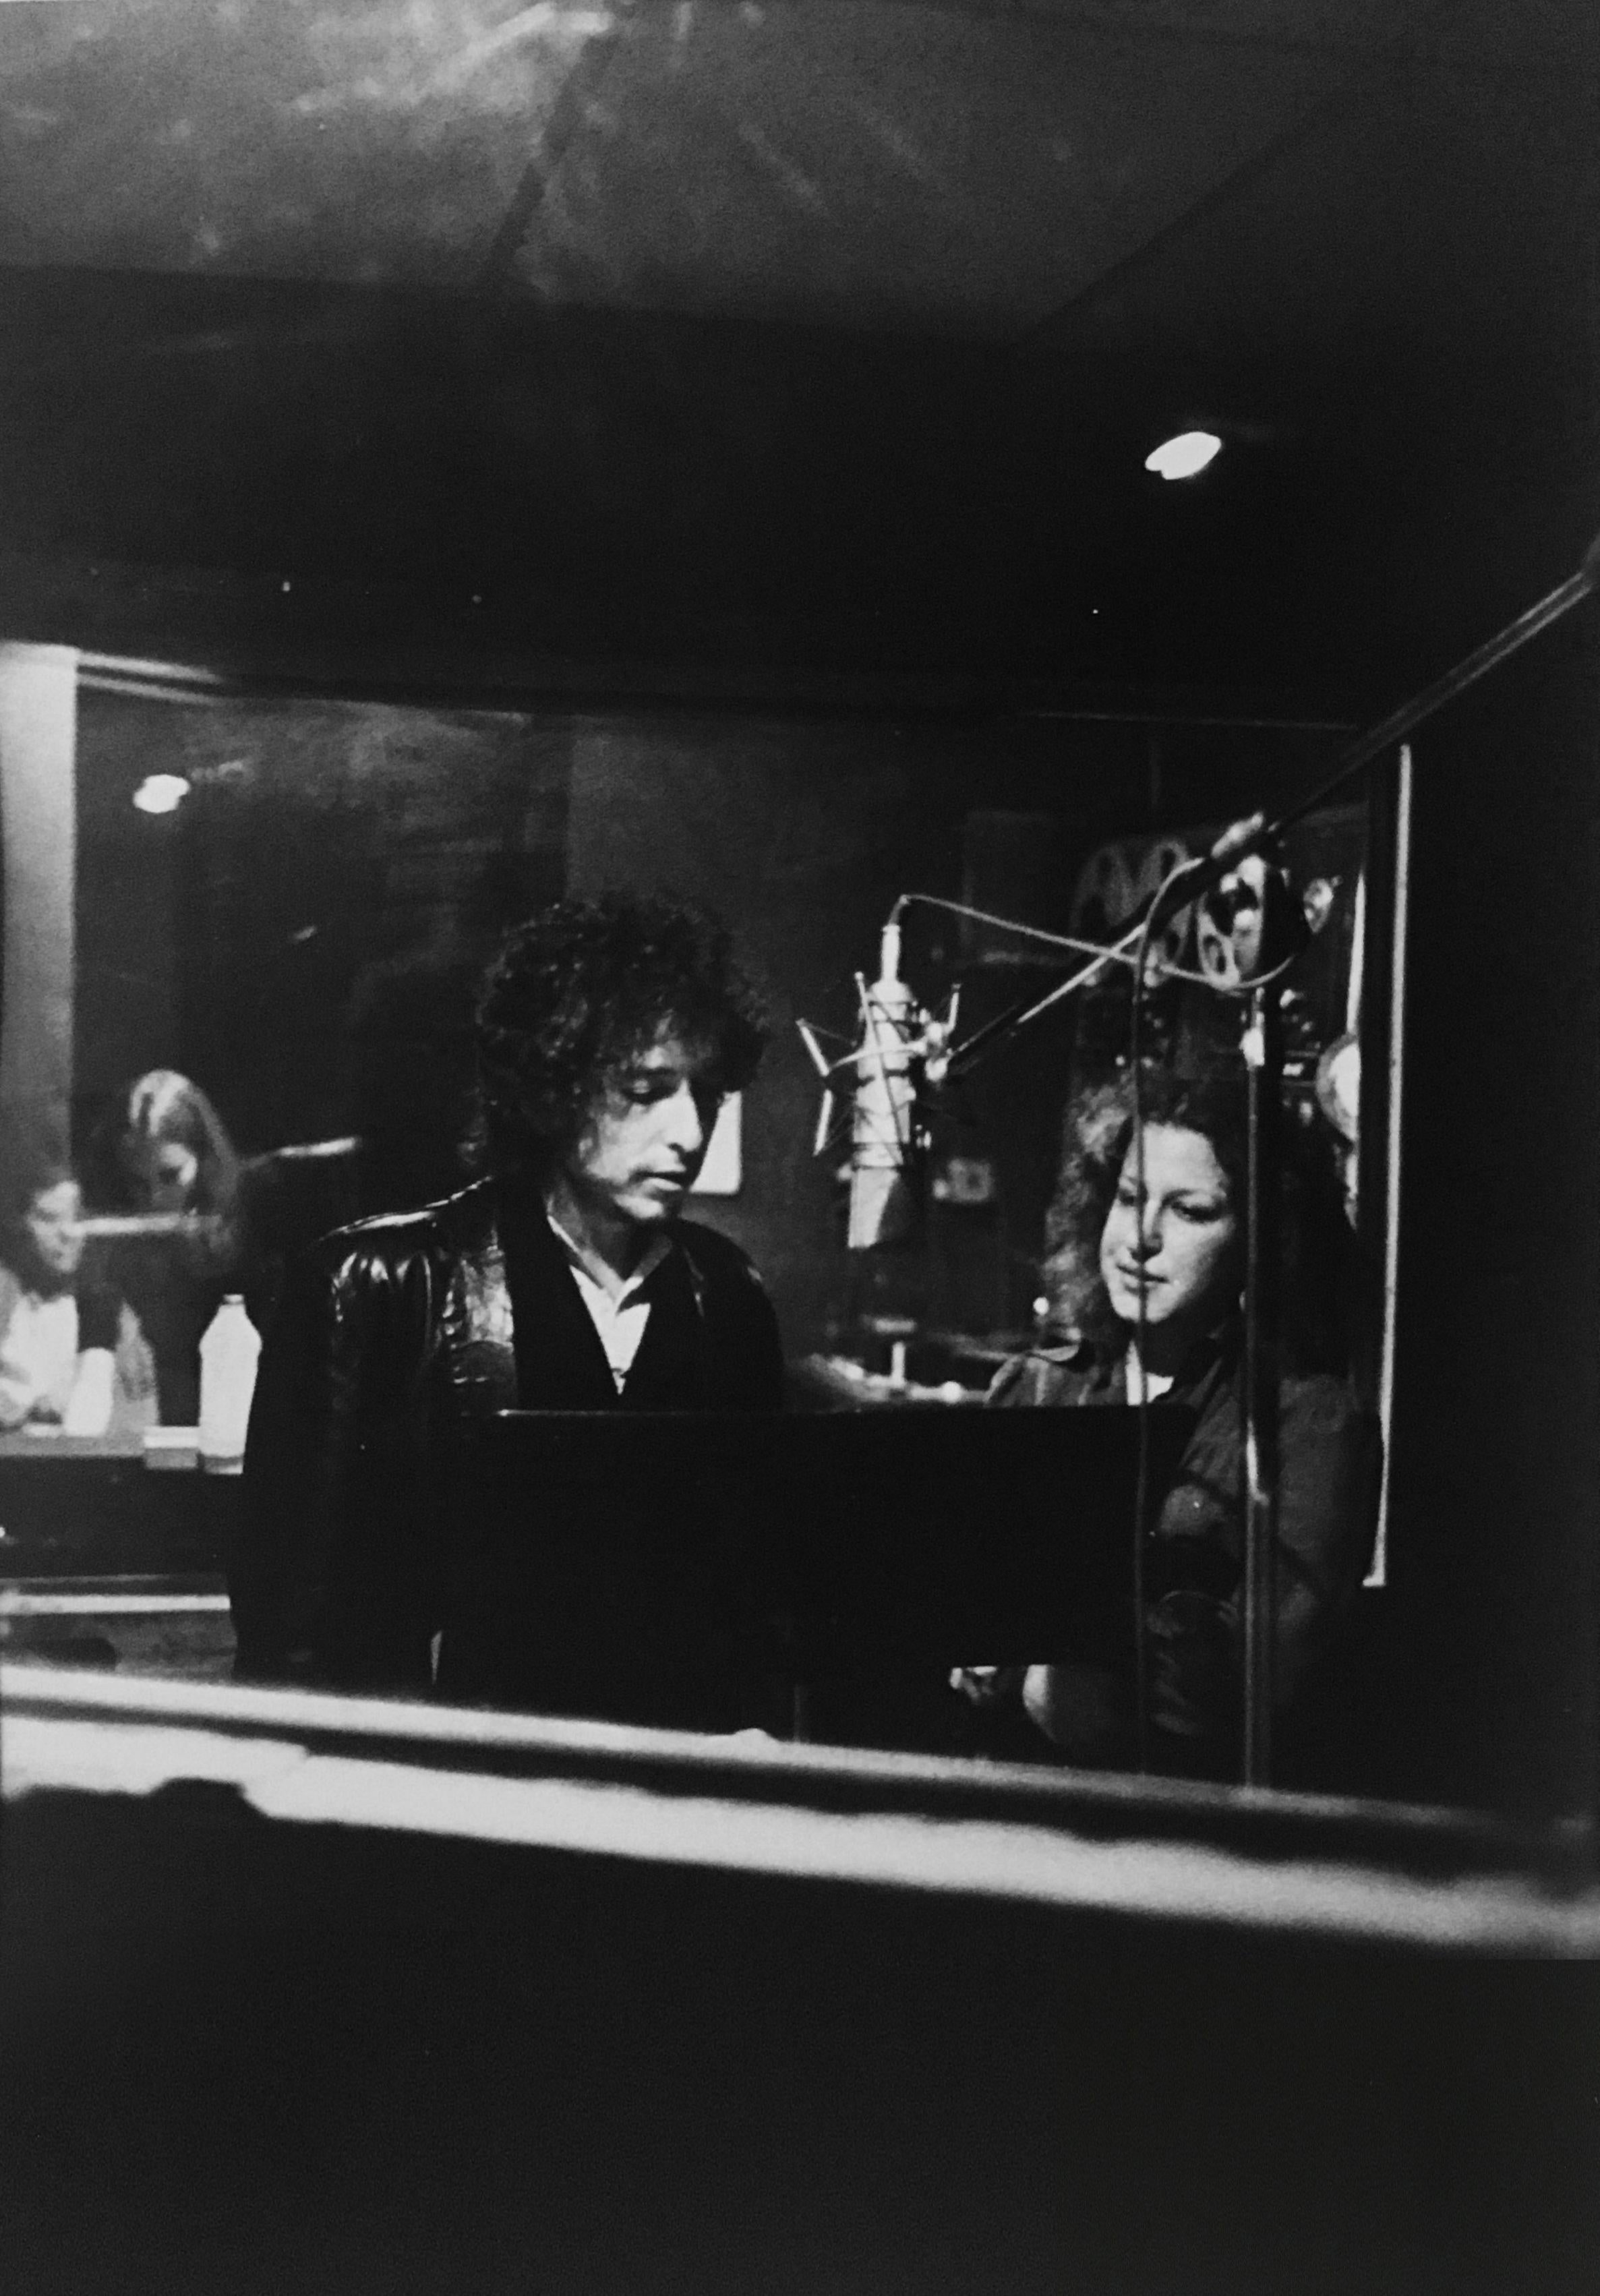 Ken Regan Portrait Photograph - Bob Dylan and Bette Midler in Studio - Rolling Thunder Tour